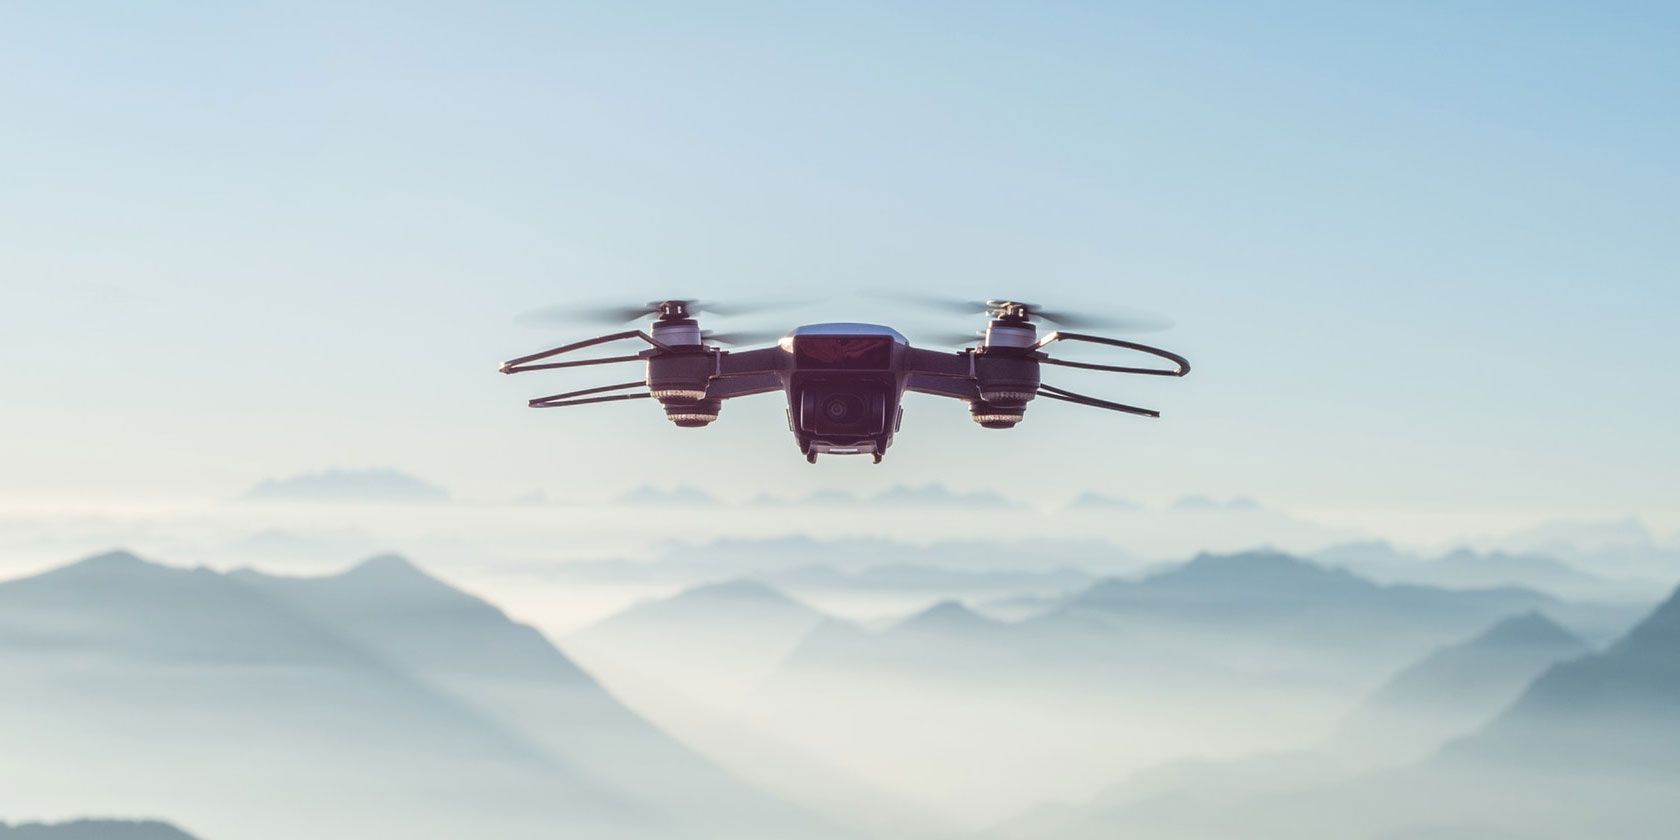 black friday drone deals 2021